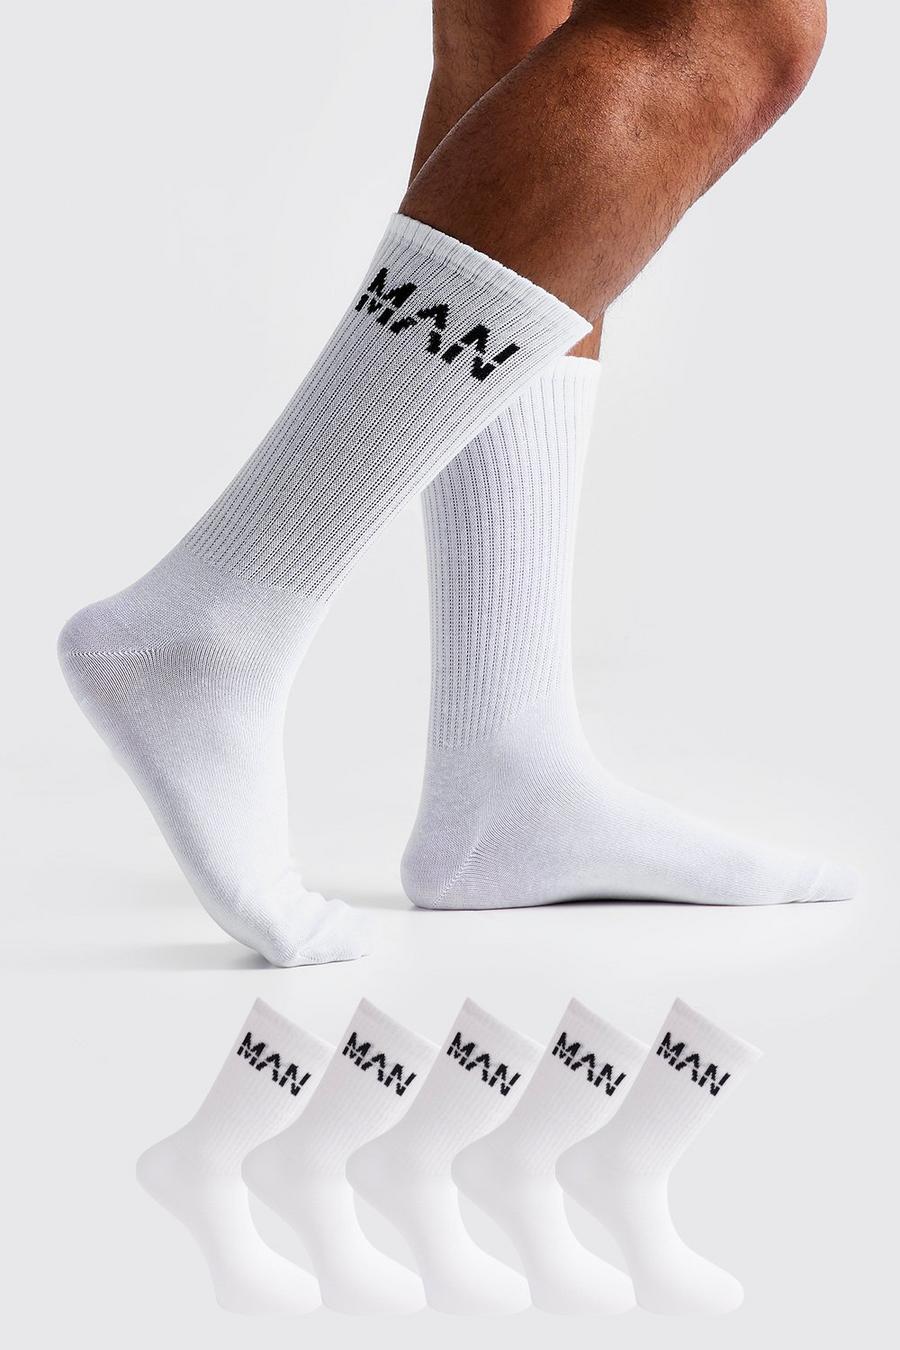 Pack de 5 pares de calcetines deportivos MAN, Blanco bianco